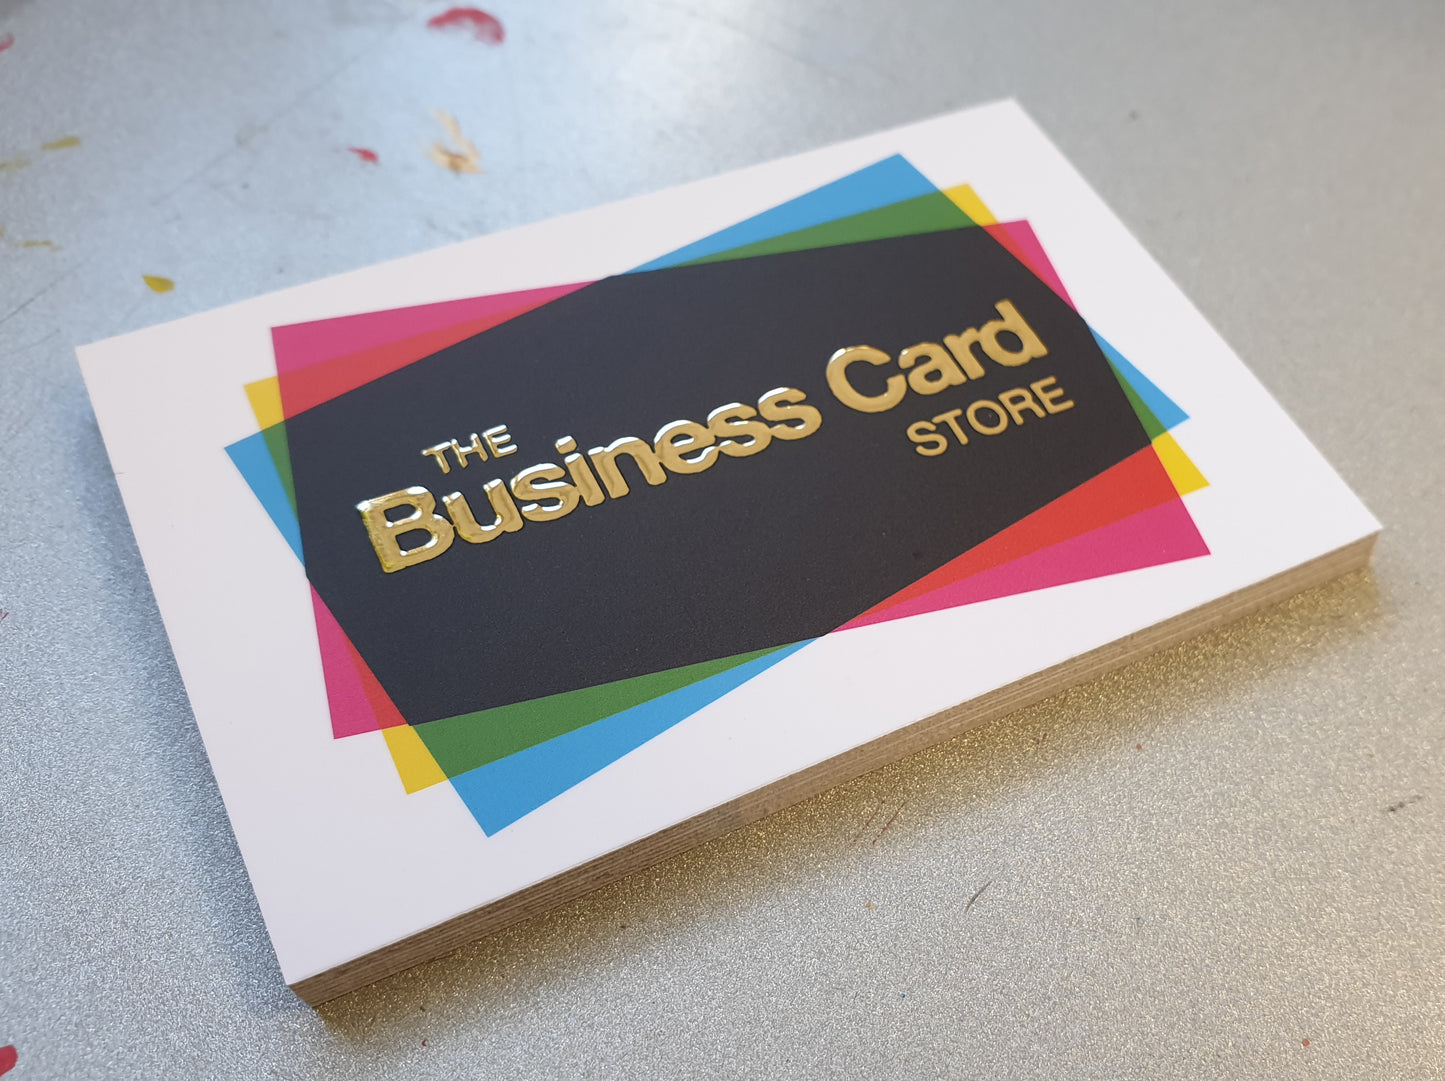 Scodix Foil Business Cards